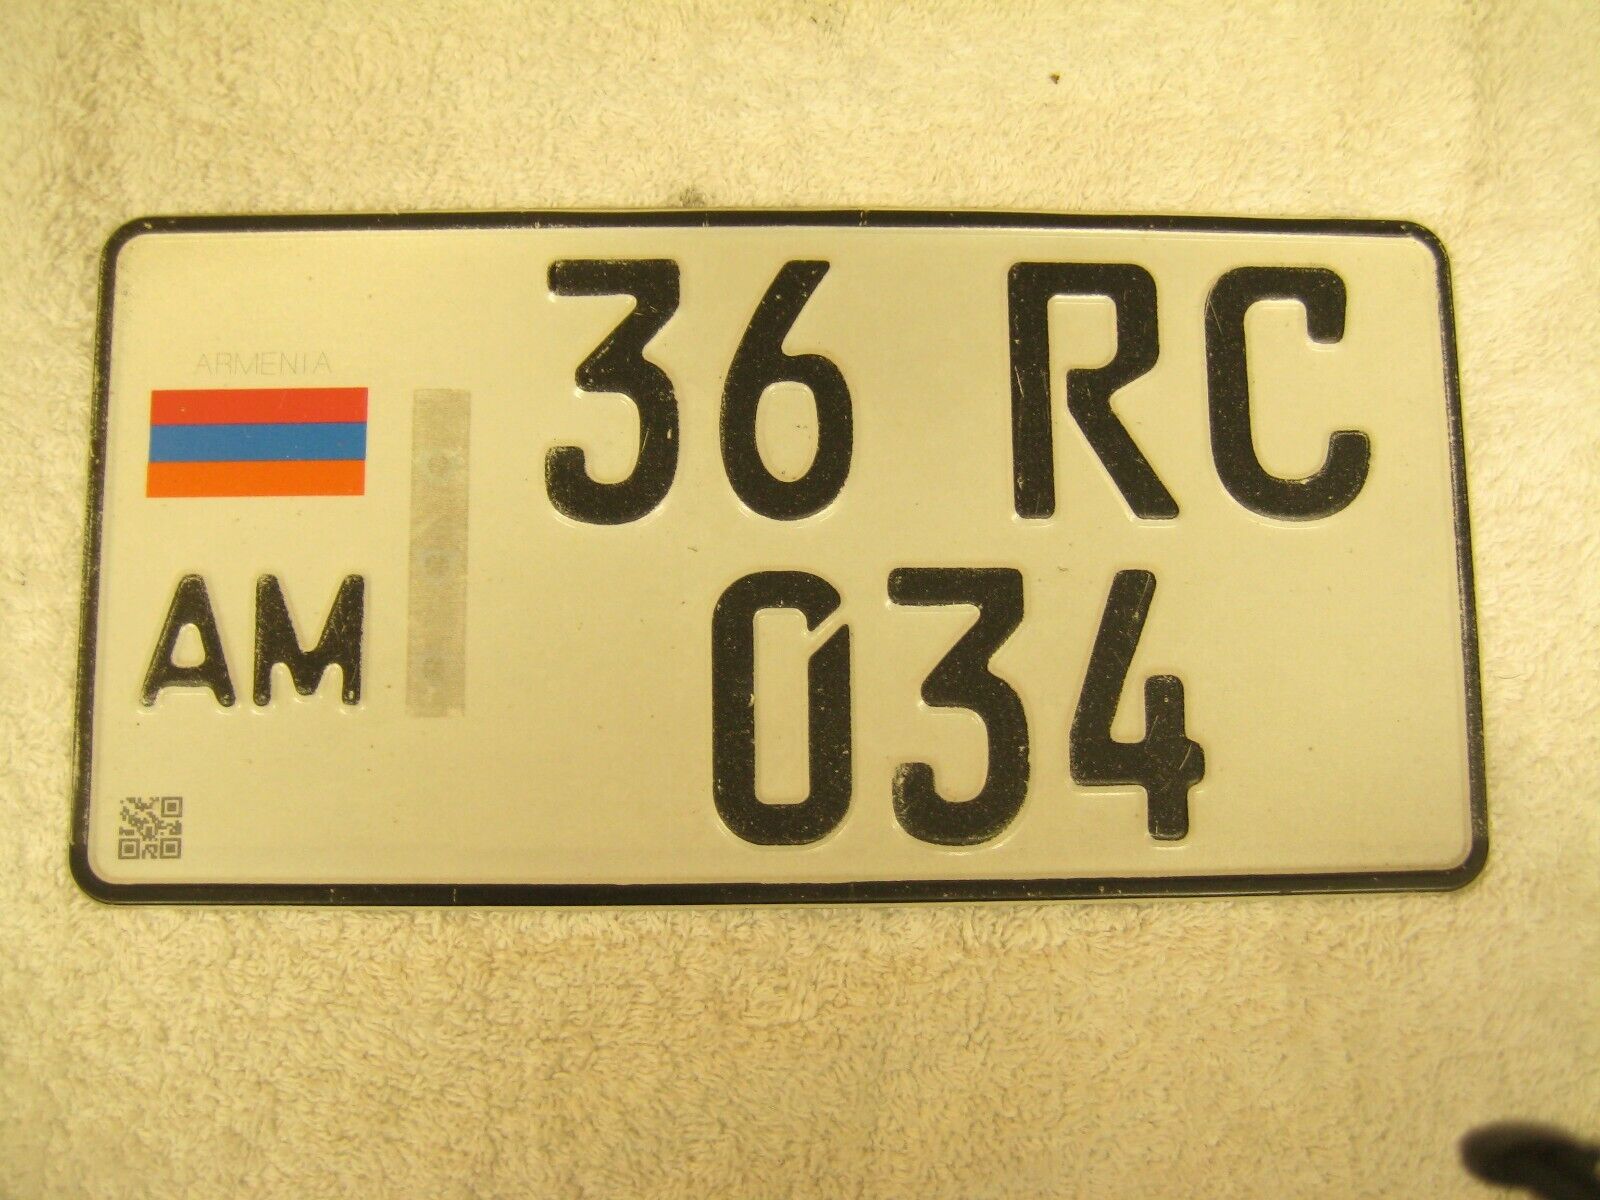 ARMENIA LORI W/ COUNTRY FLAG # 36 RC 034 WITH HOLOGRAM RARE SQUARE LICENSE PLATE